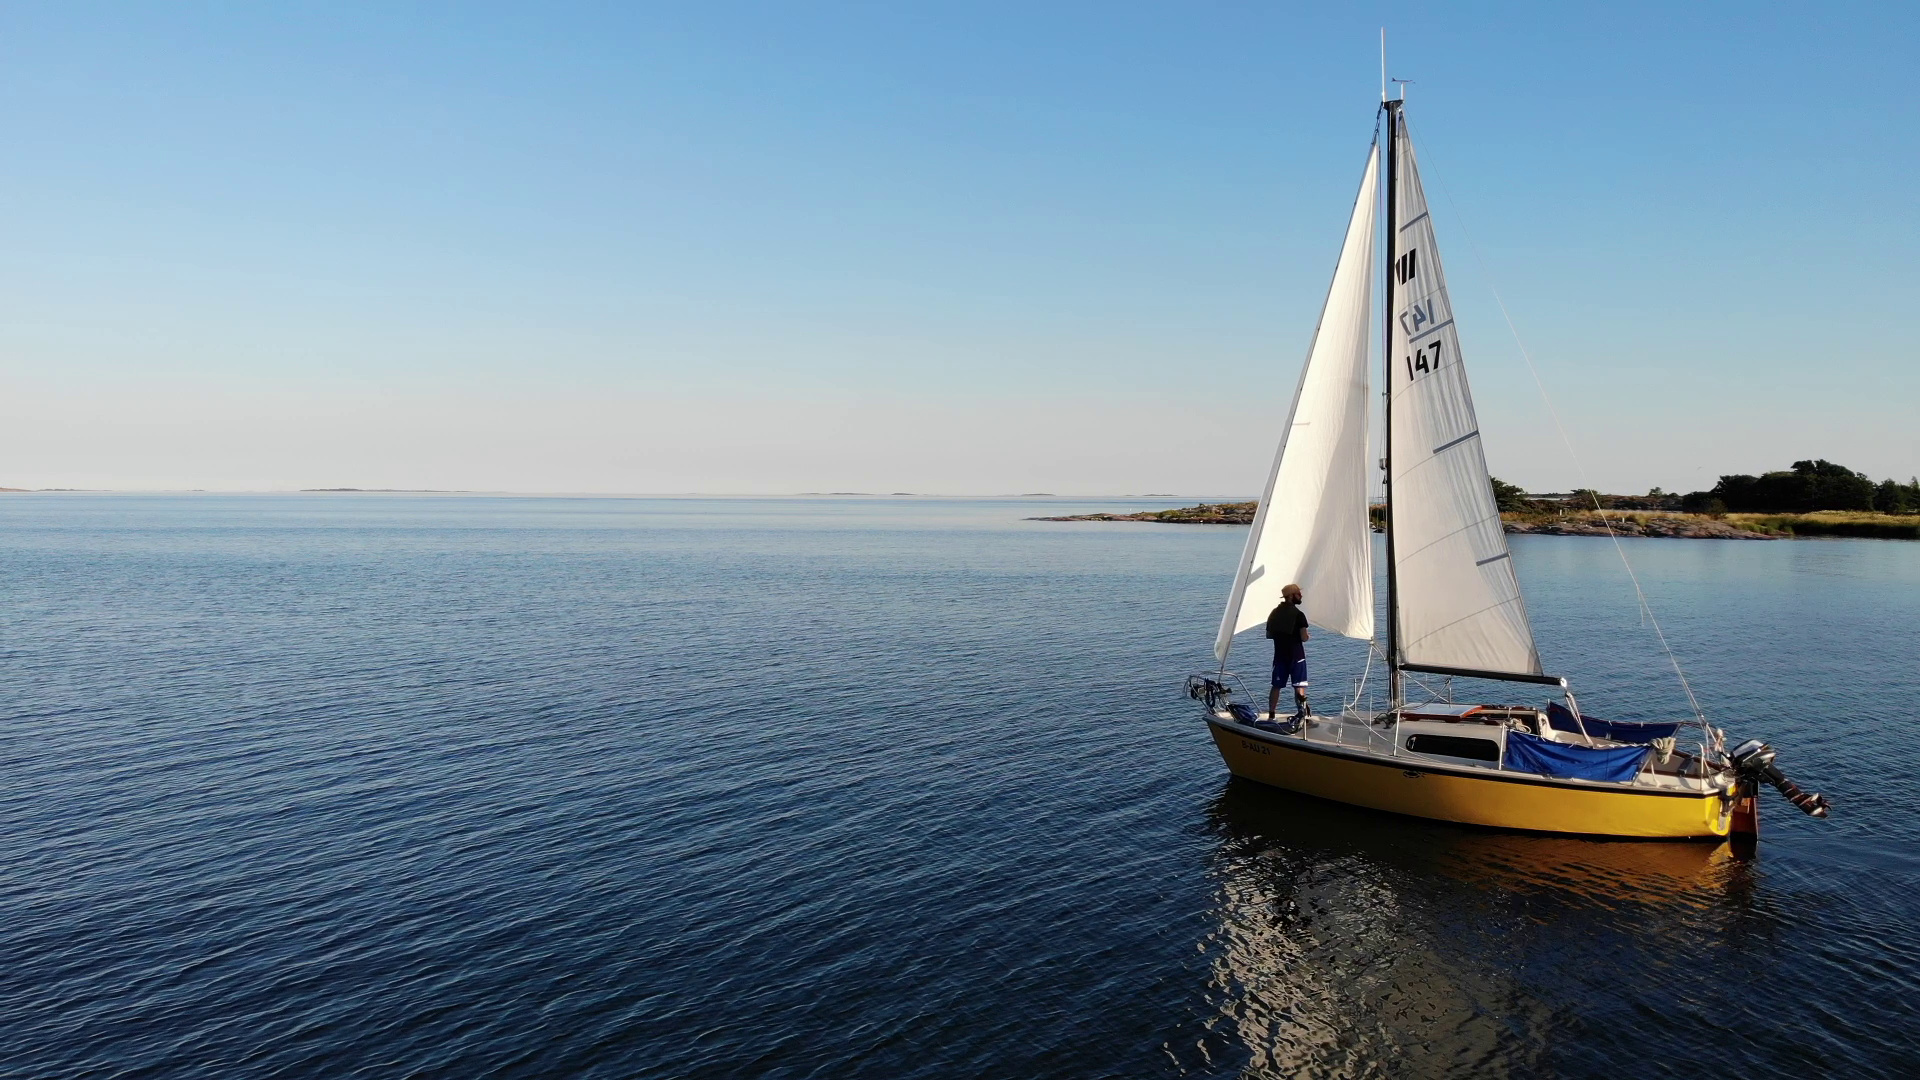 Oland island charm, Swedish sailing adventure, Baltic beauty, Oland landscapes, 1920x1080 Full HD Desktop